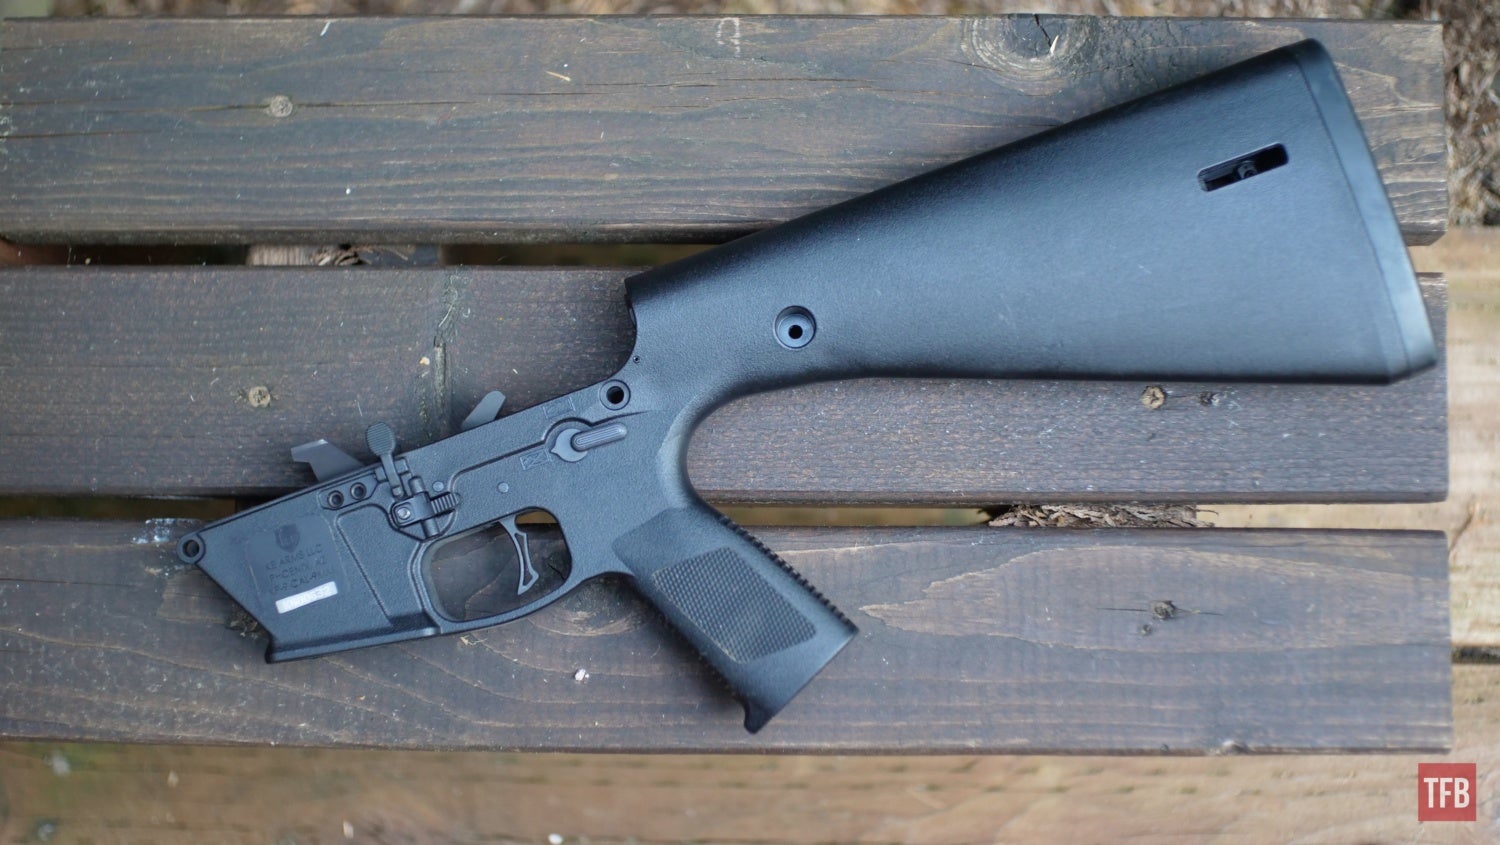 TFB Review: The KE Arms KP-9 - The KP-15's 9mm PCC Cousin